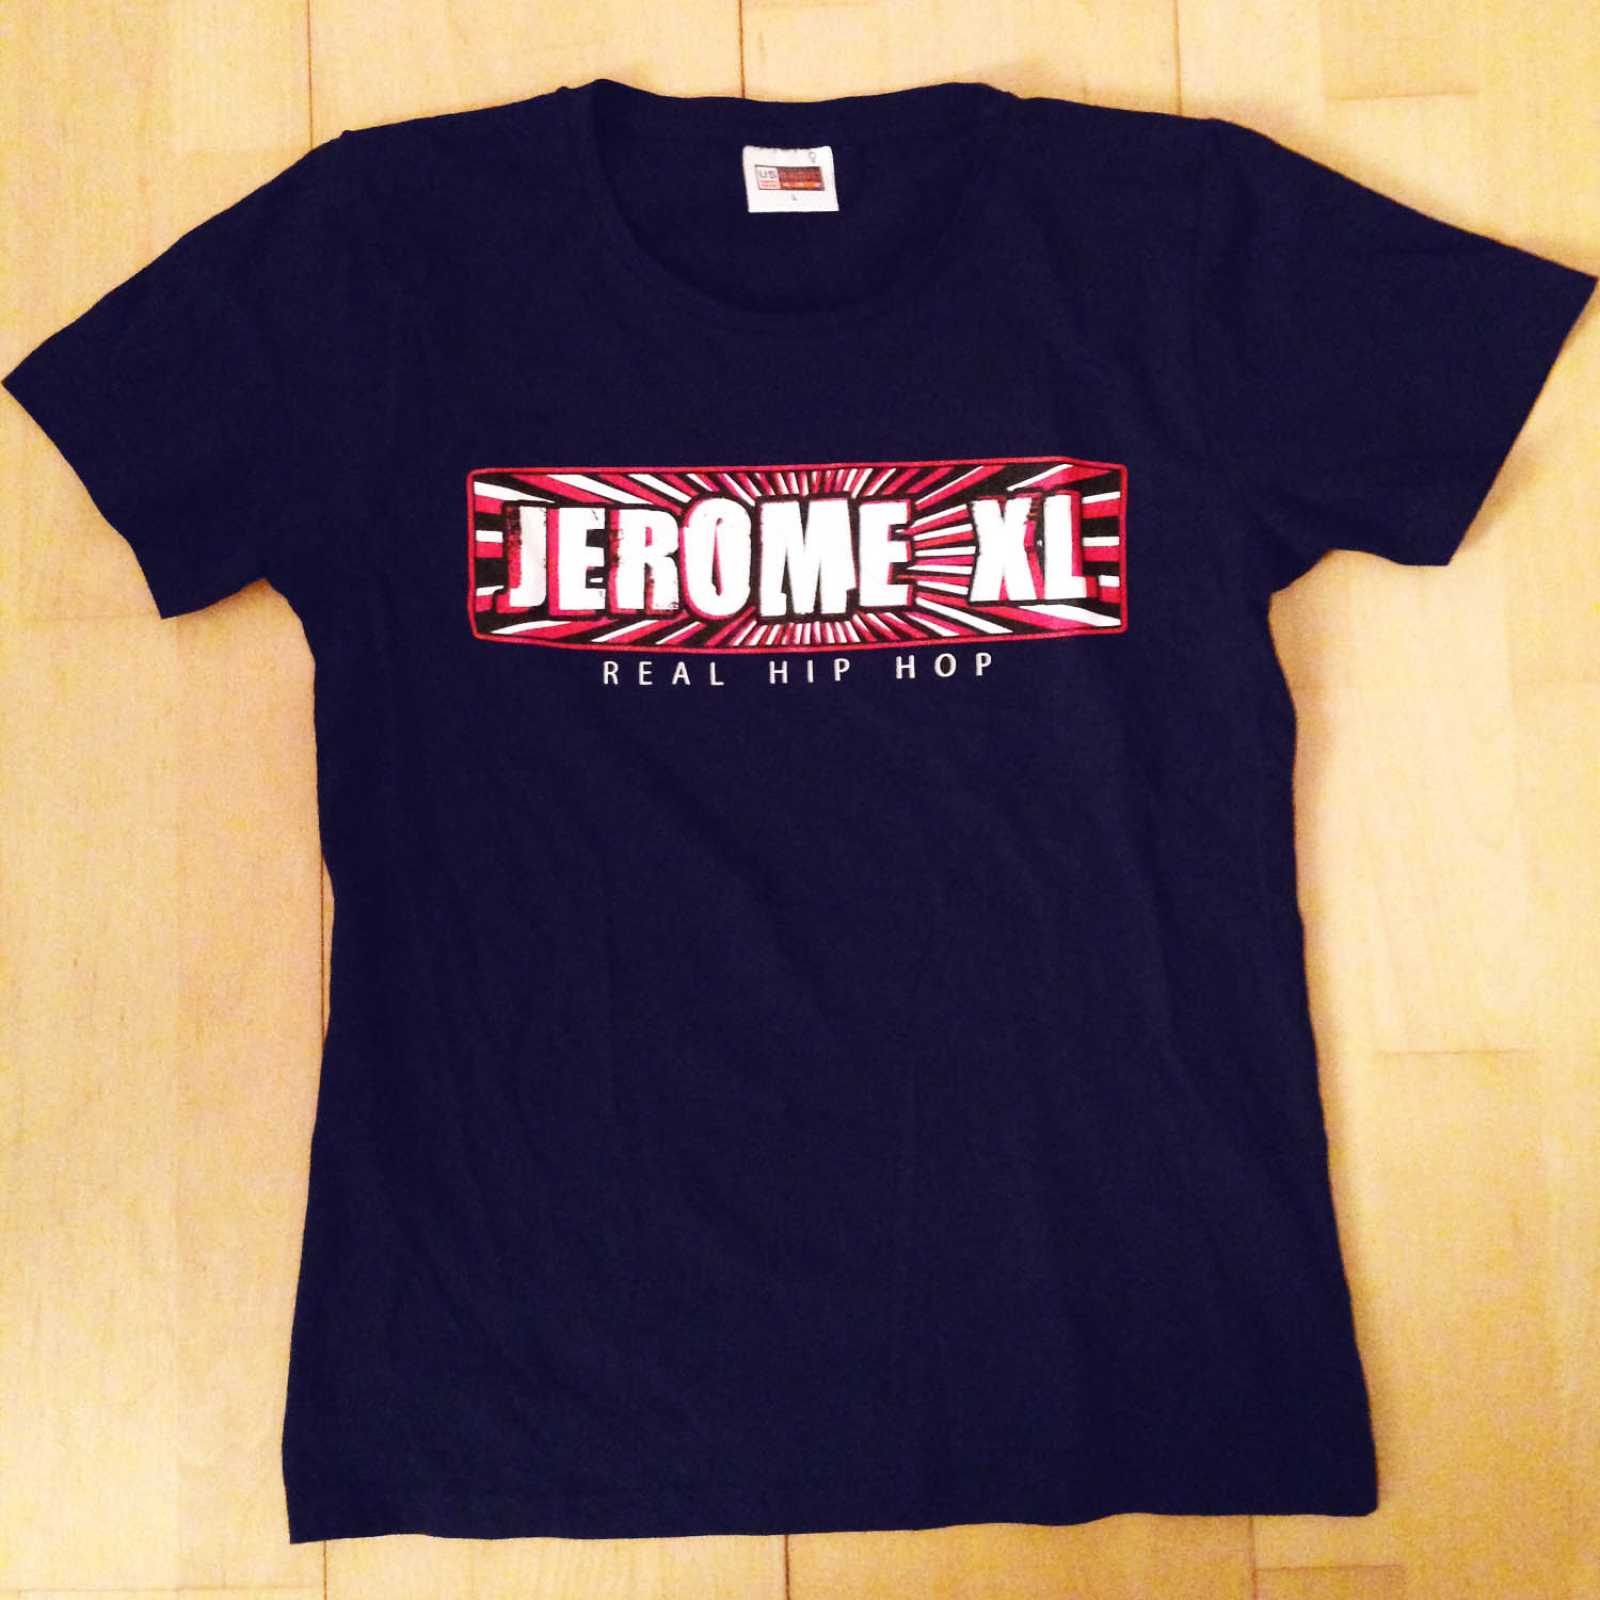 Jerome XL - Girly T-Shirt - Navy Blauw